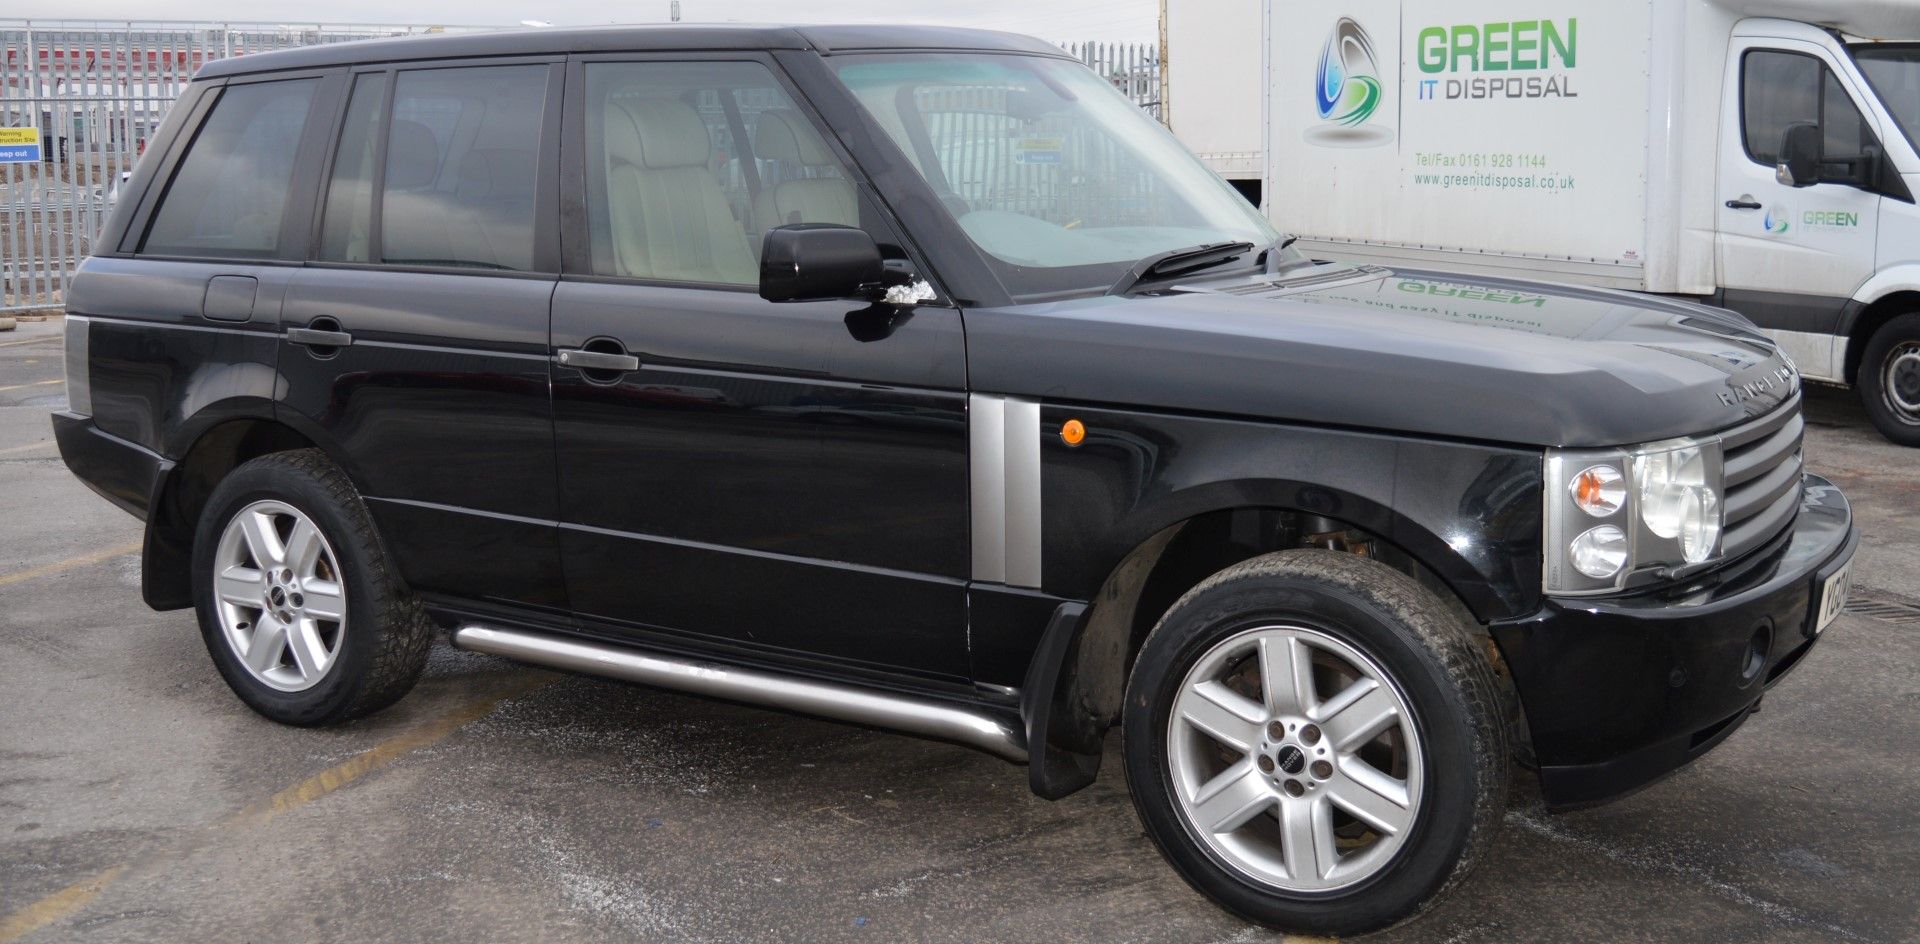 1 x Range Rover Vogue V8 4.4 Automatic - Black, Leather Interior, Petrol, Television, Premium - Image 37 of 63